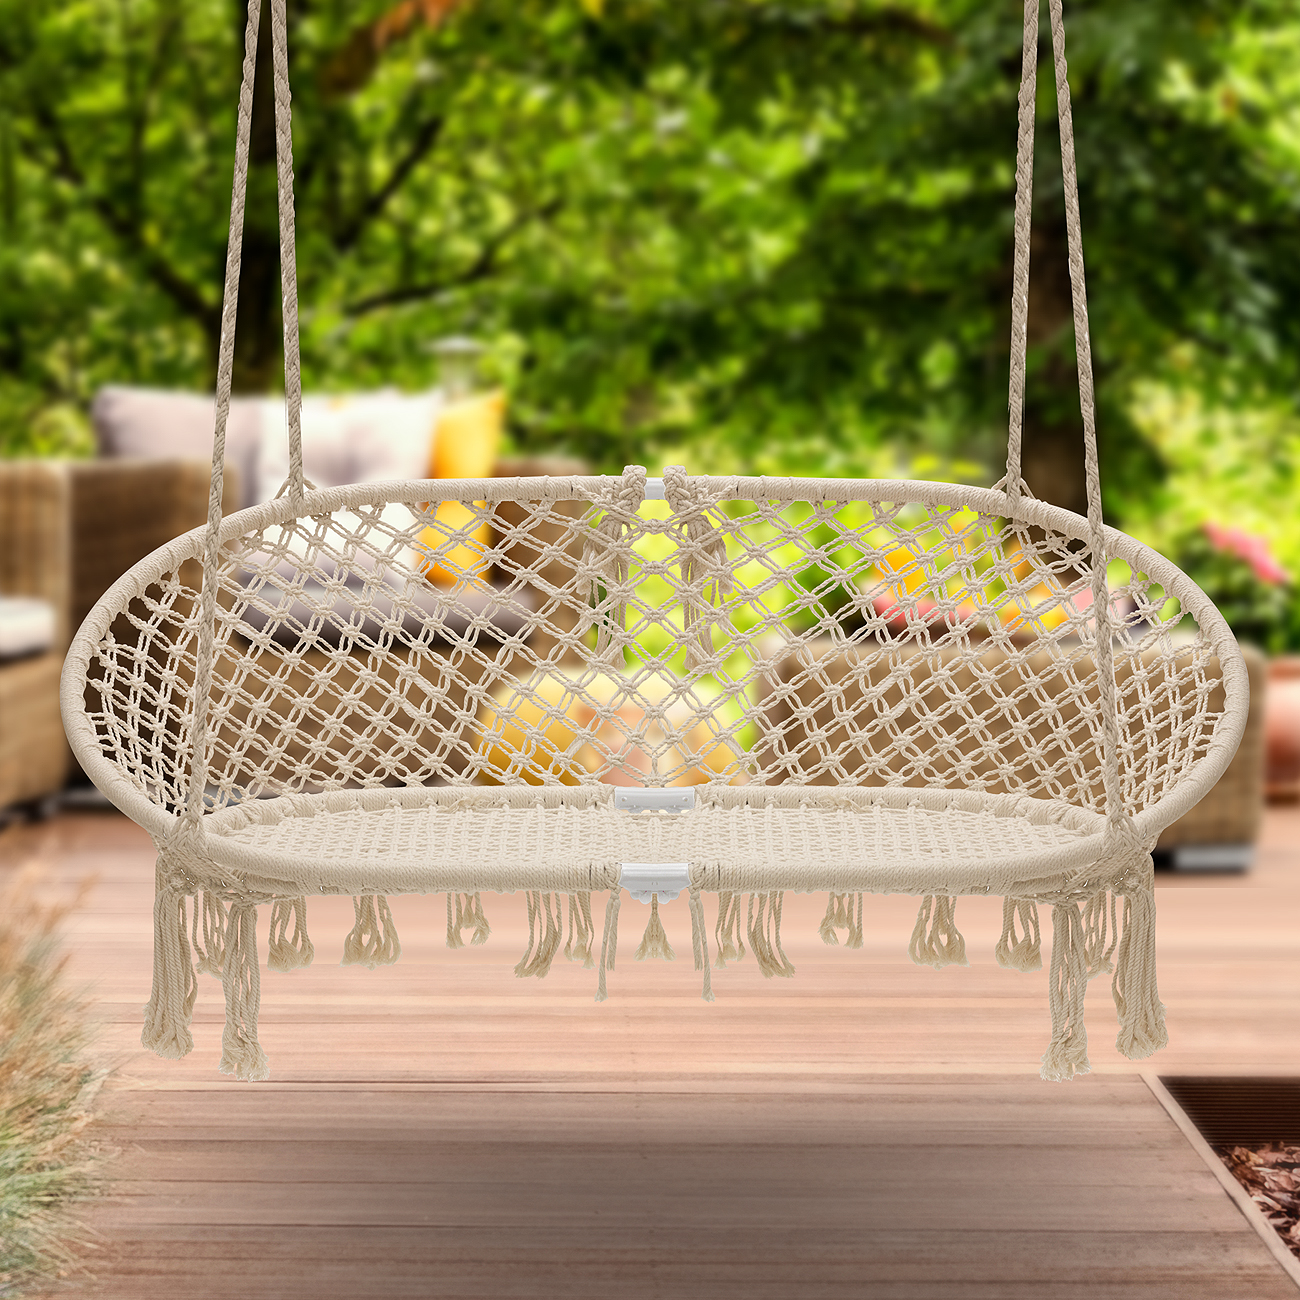 Sorbus Double Hammock Chair Macramé Swing, 300 Pound Capacity, Perfect for Indoor/Outdoor Home, Patio, Deck, Yard, Garden - image 3 of 8